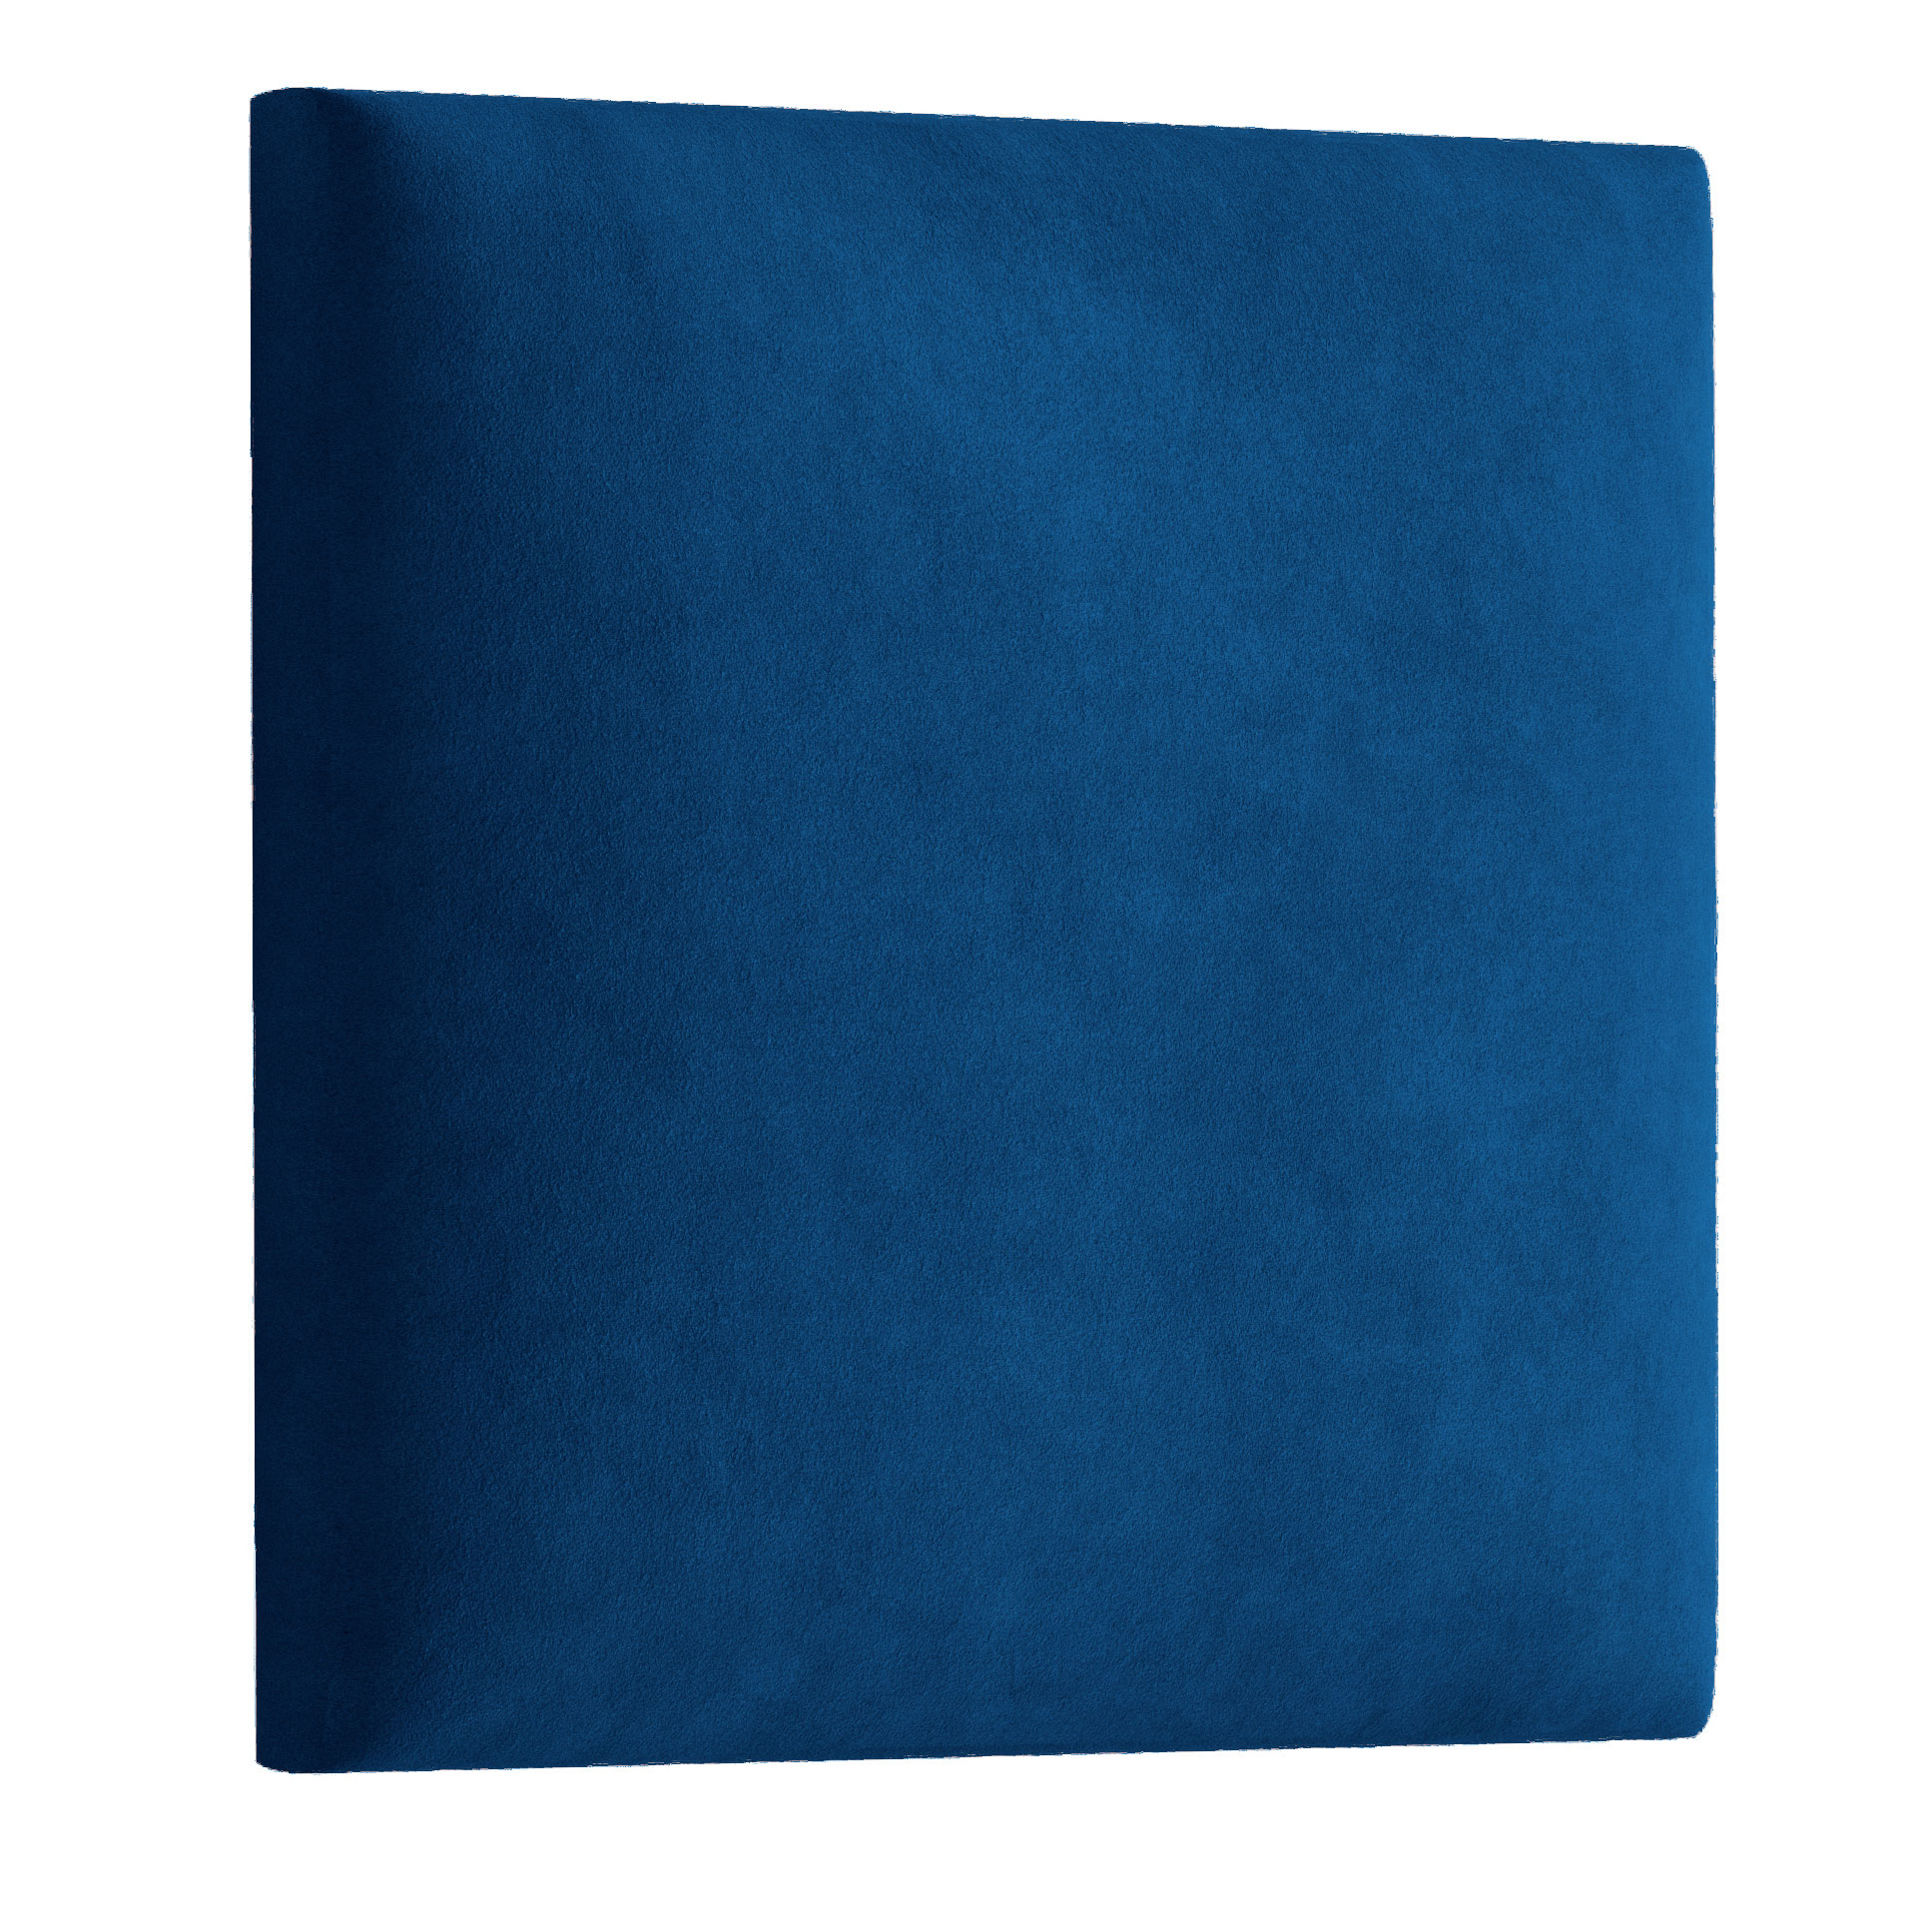 Eka Čalouněný panel Trinity 50 x 40 cm - Tmavá modrá 2331